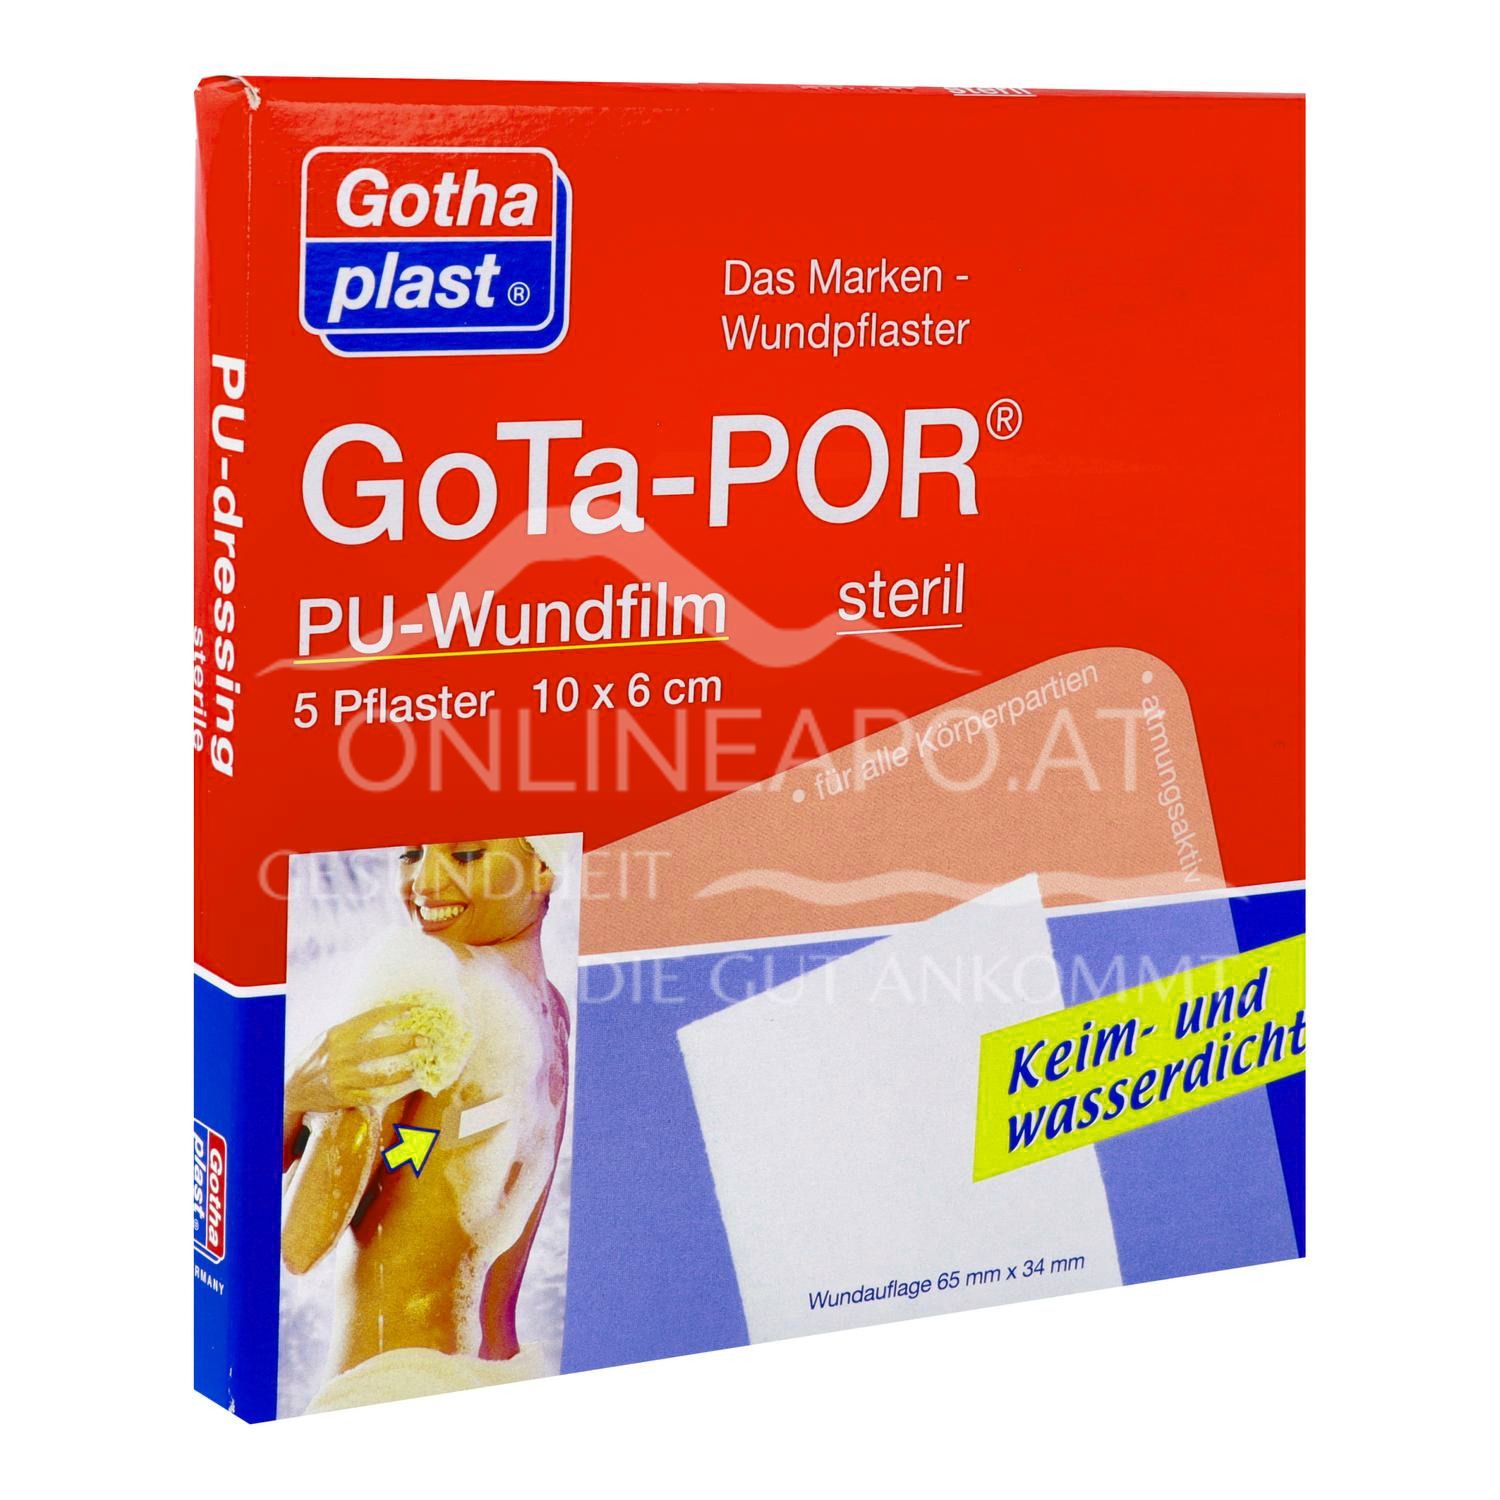 Gothaplast® GoTa-POR PU-Wundfilm steril 10 x 6 cm